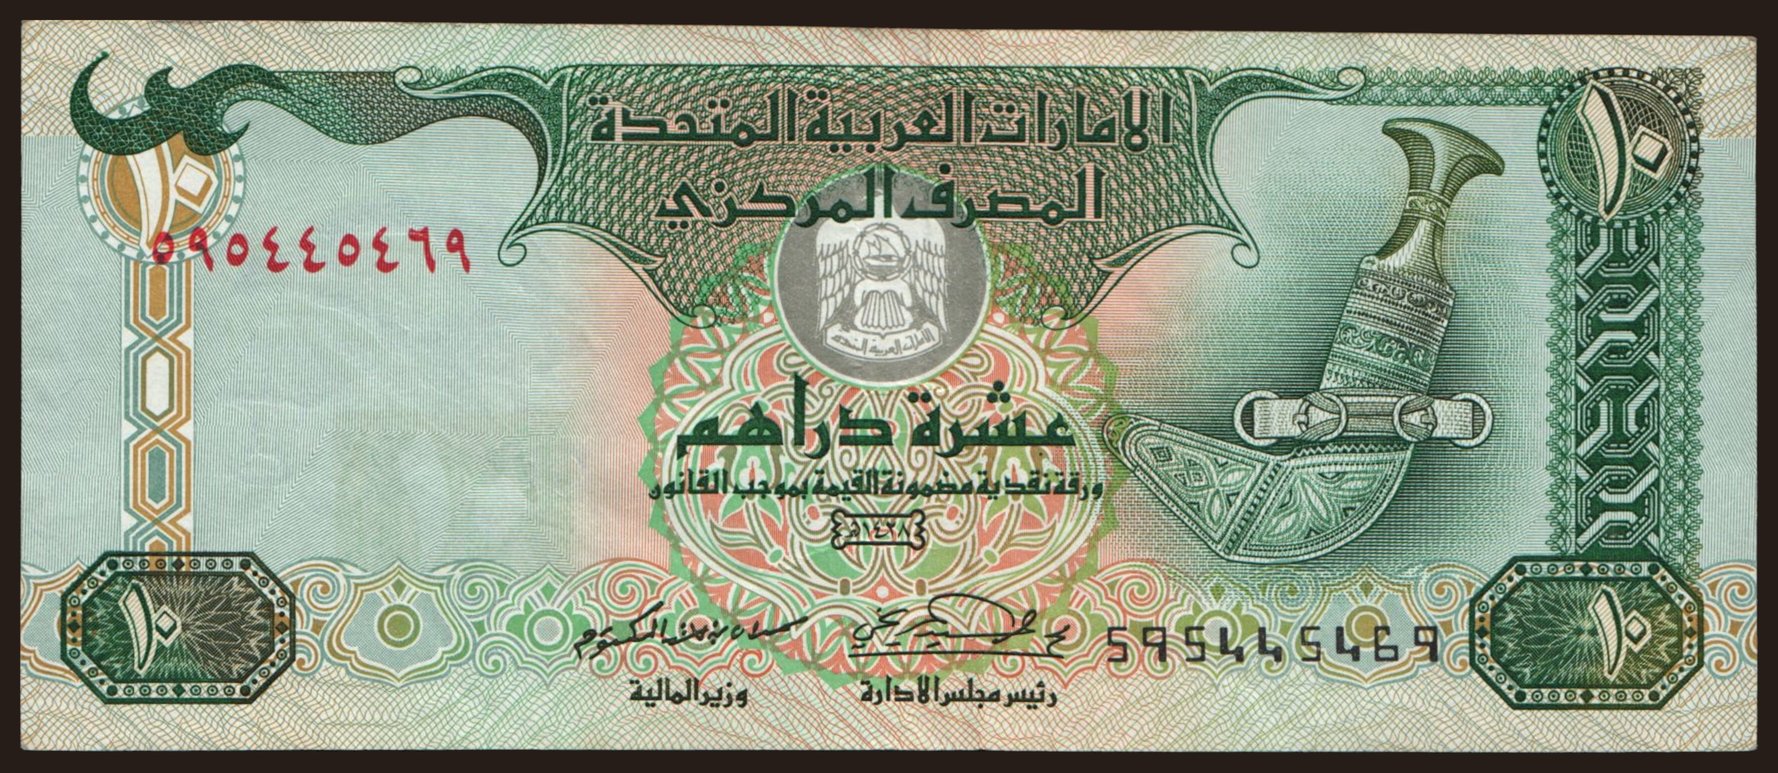 10 dirhams, 2007